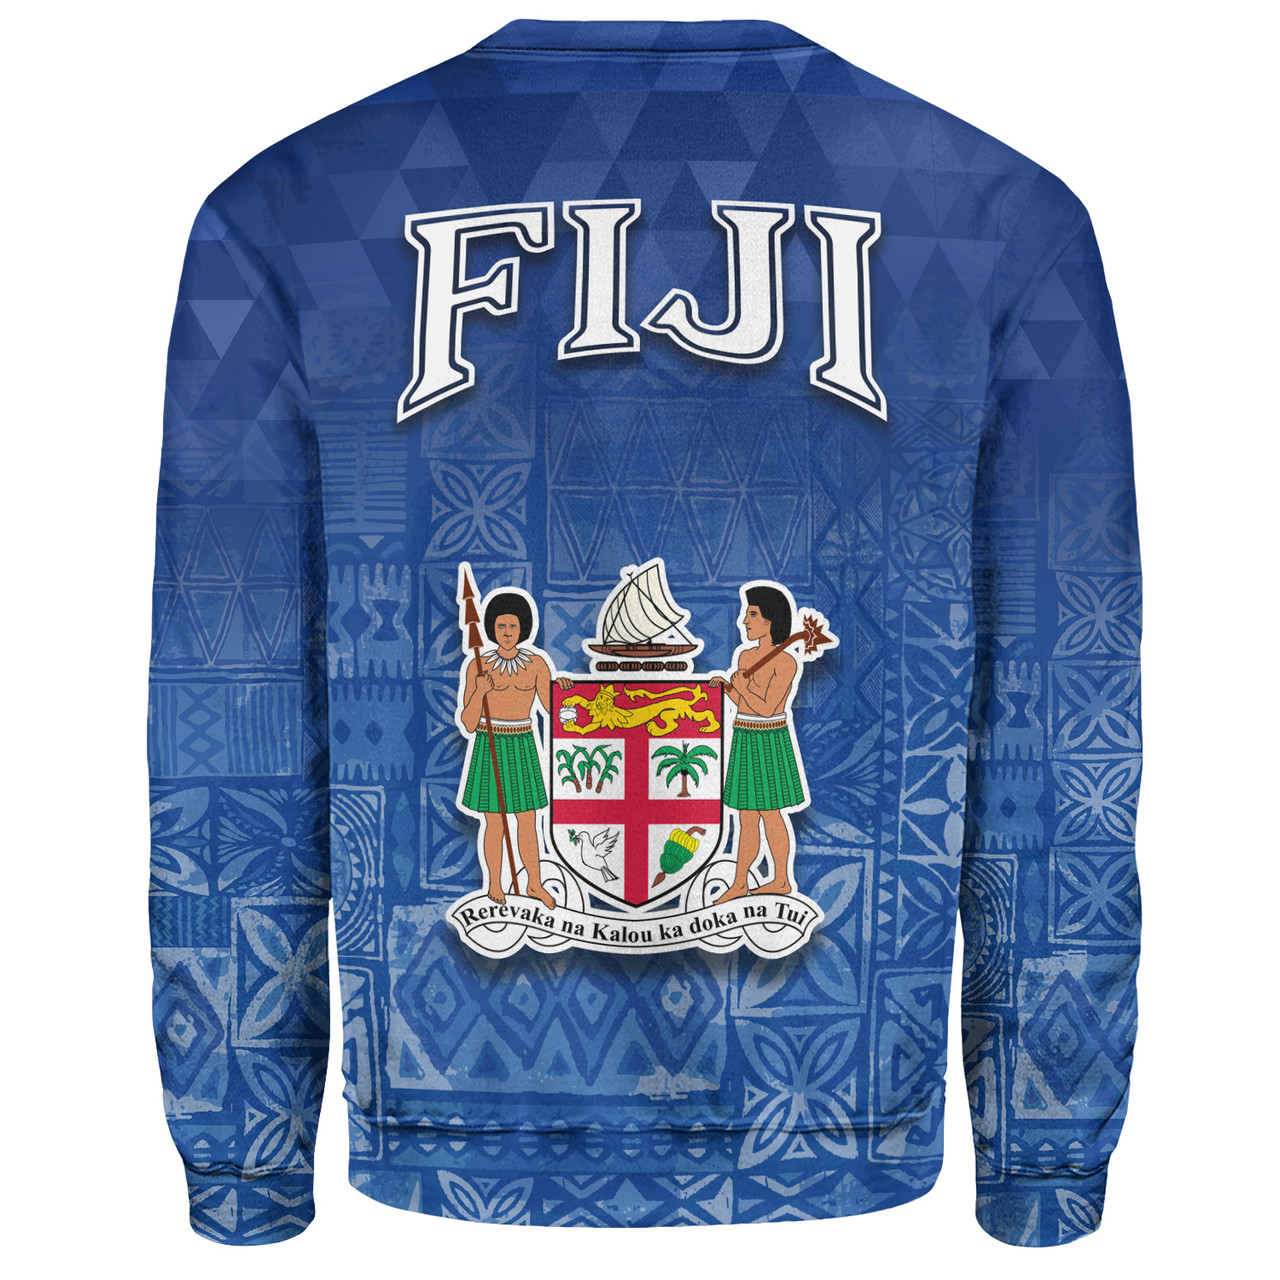 Fiji Sweatshirt Loloma Fijian Love Polynesian